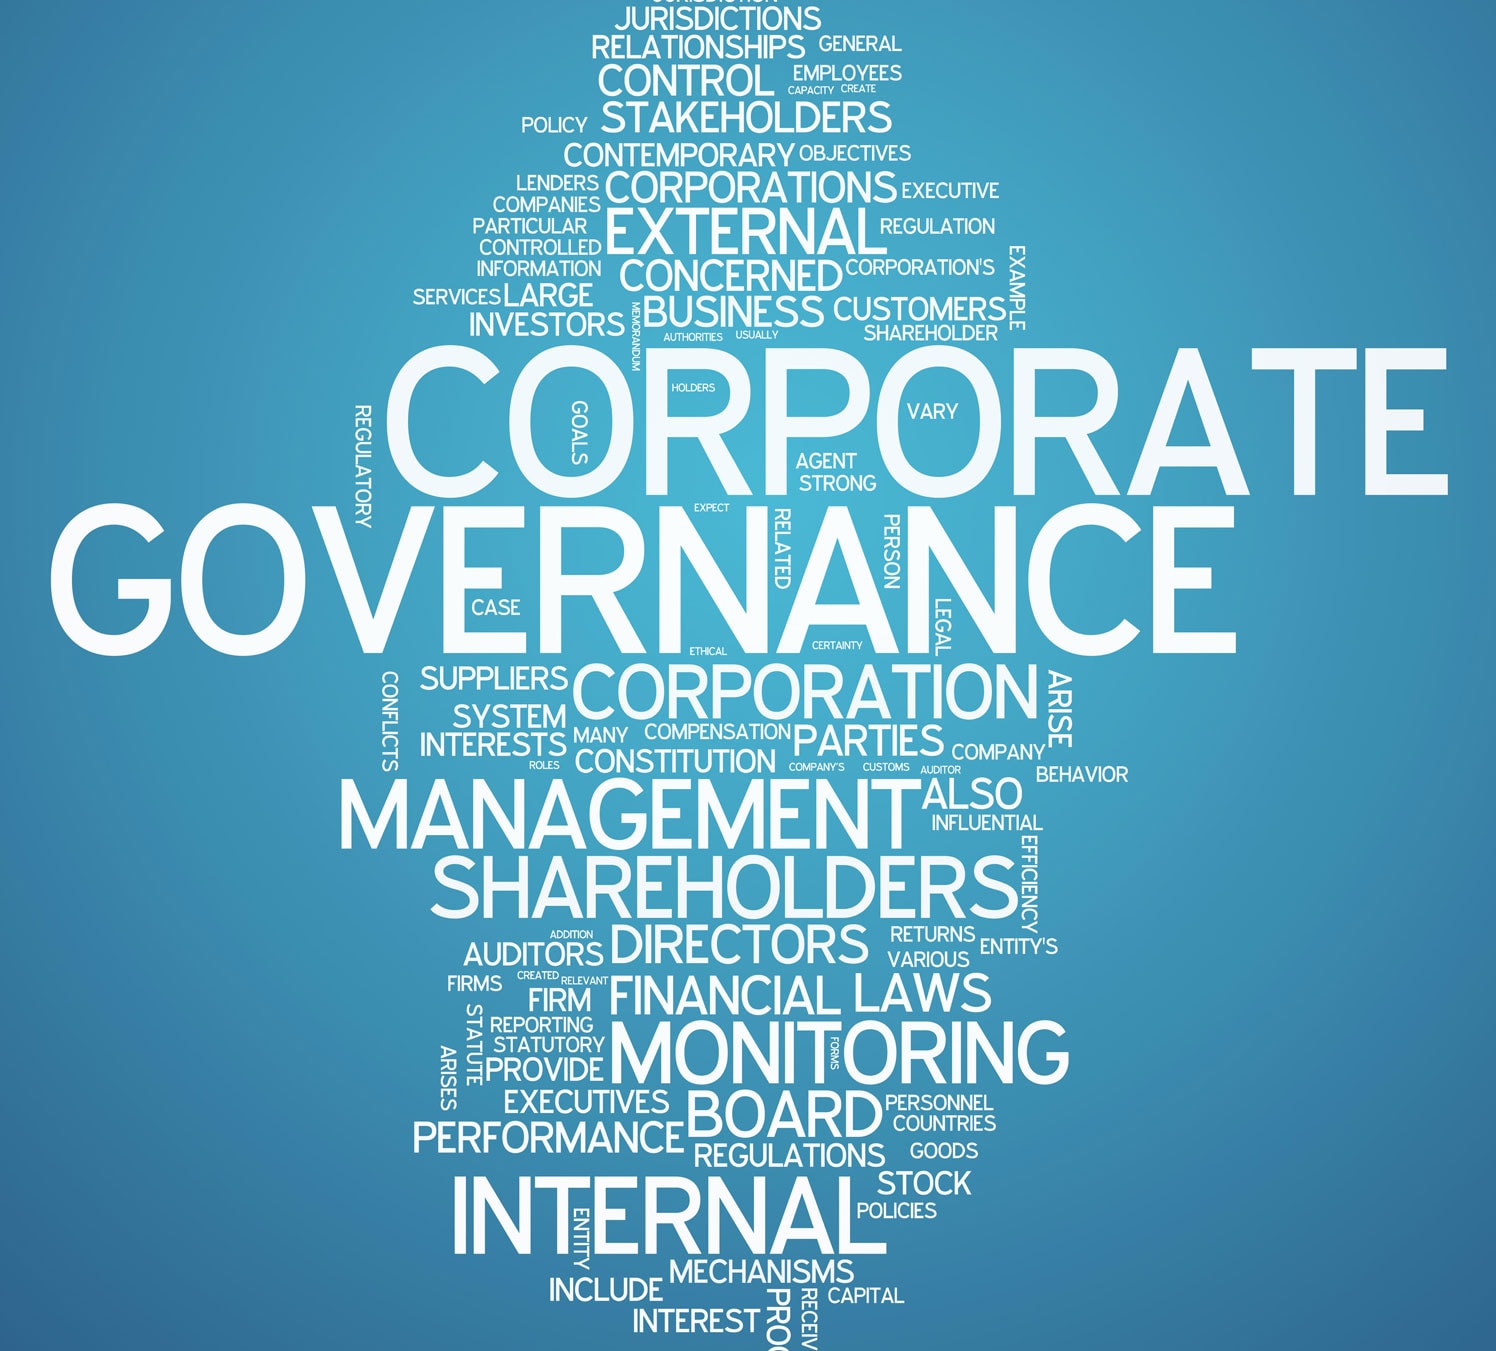 Corporate Governance at Jenoptik